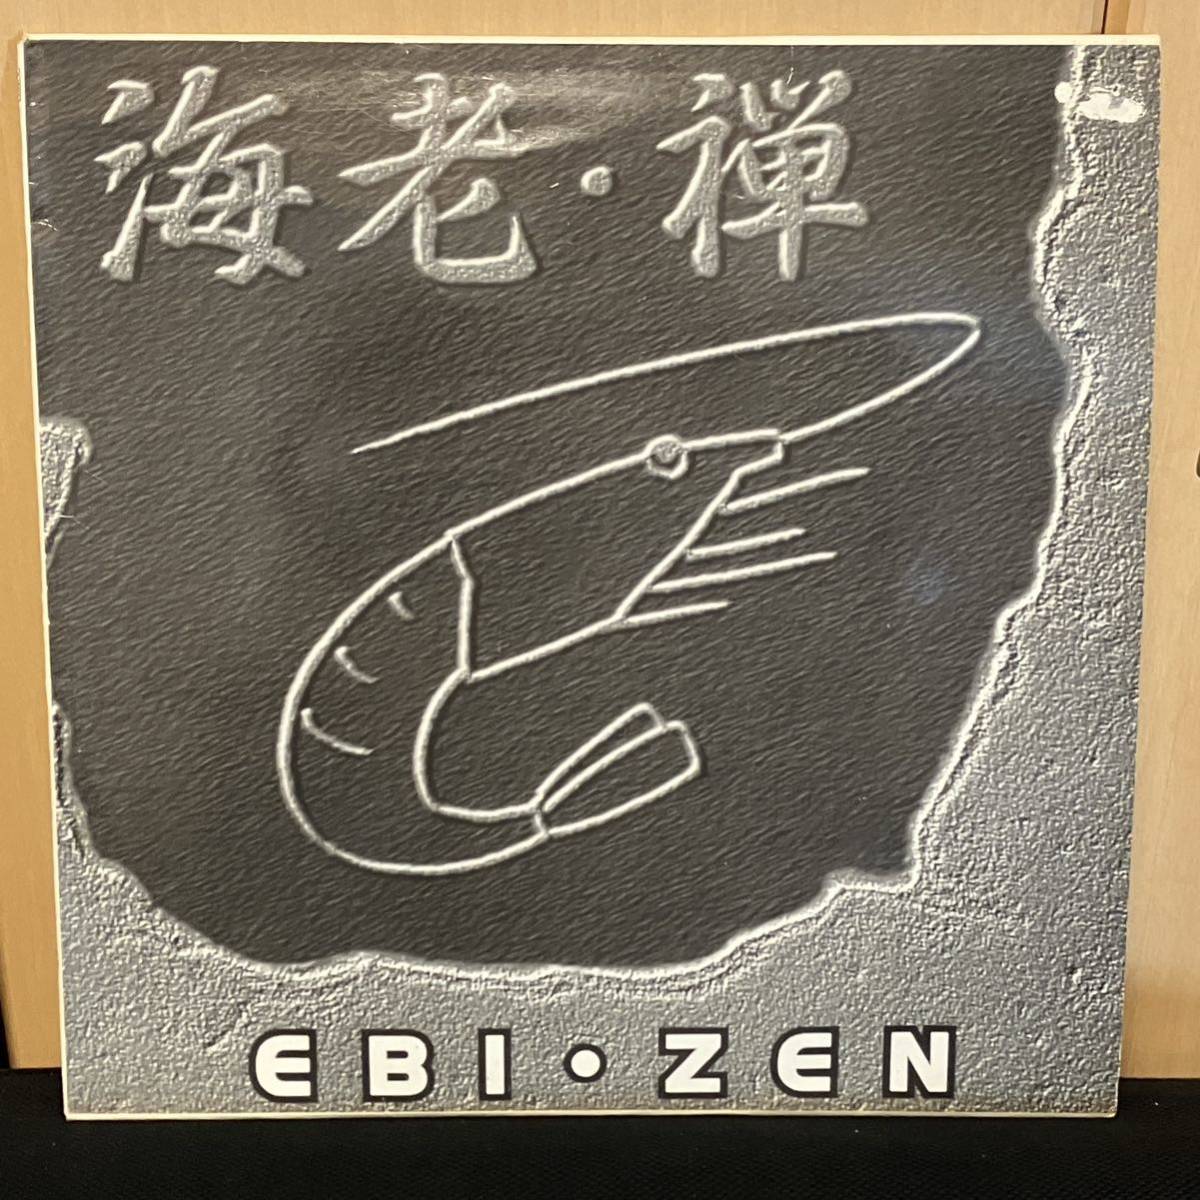 Ebi - Zen 激レアカラー盤( susumu yokota Space Teddy techno downtempo ambient acid house minimal テクノ ハウス ミニマル )